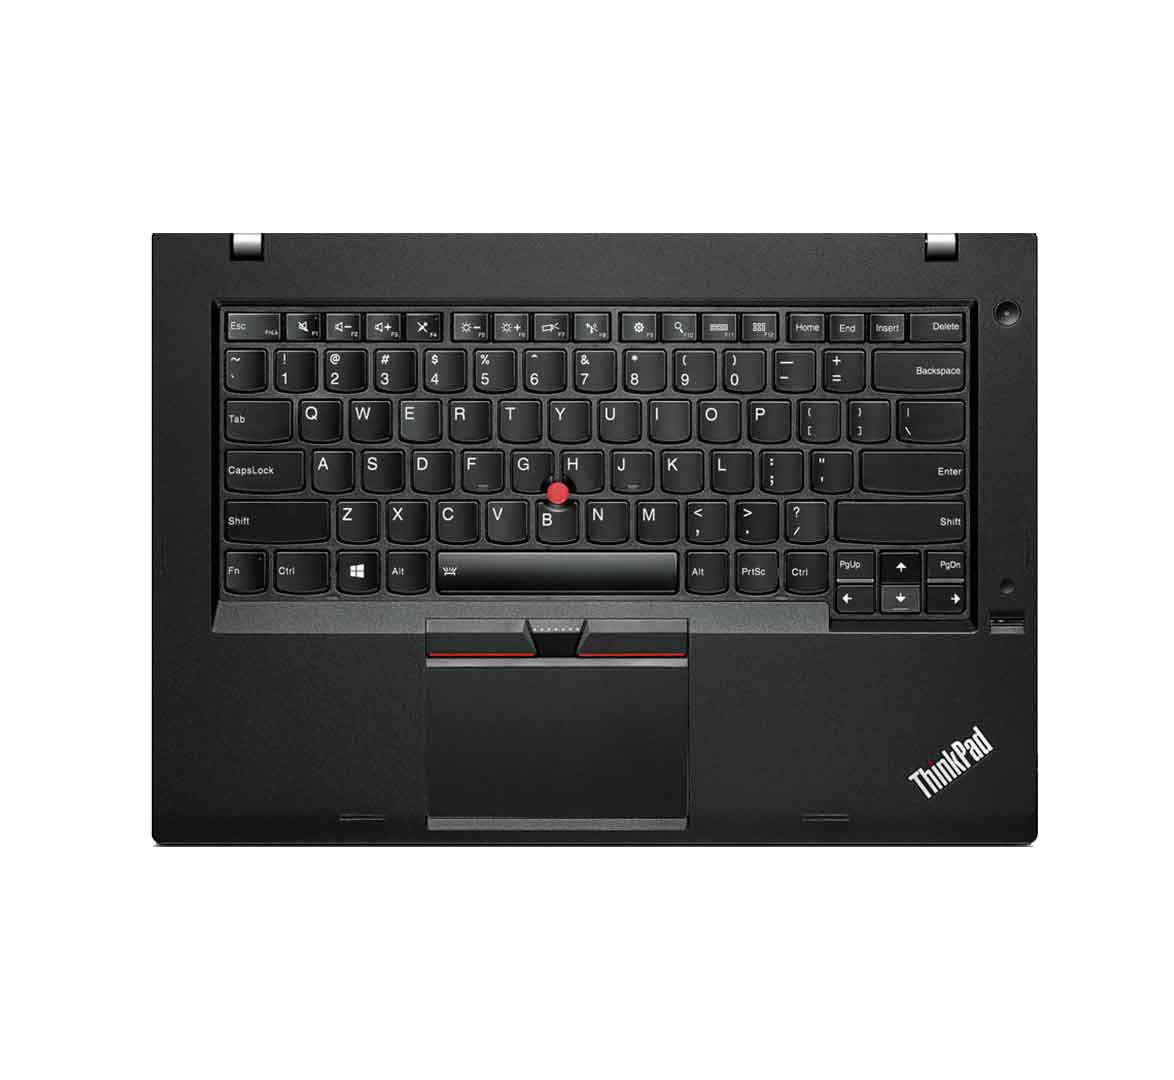 Lenovo ThinkPad L540 Business Laptop, Intel Core i5-4th Generation CPU, 4GB RAM, 500 HDD, 14 inch Display, Windows 10 Pro, Refurbished Laptop